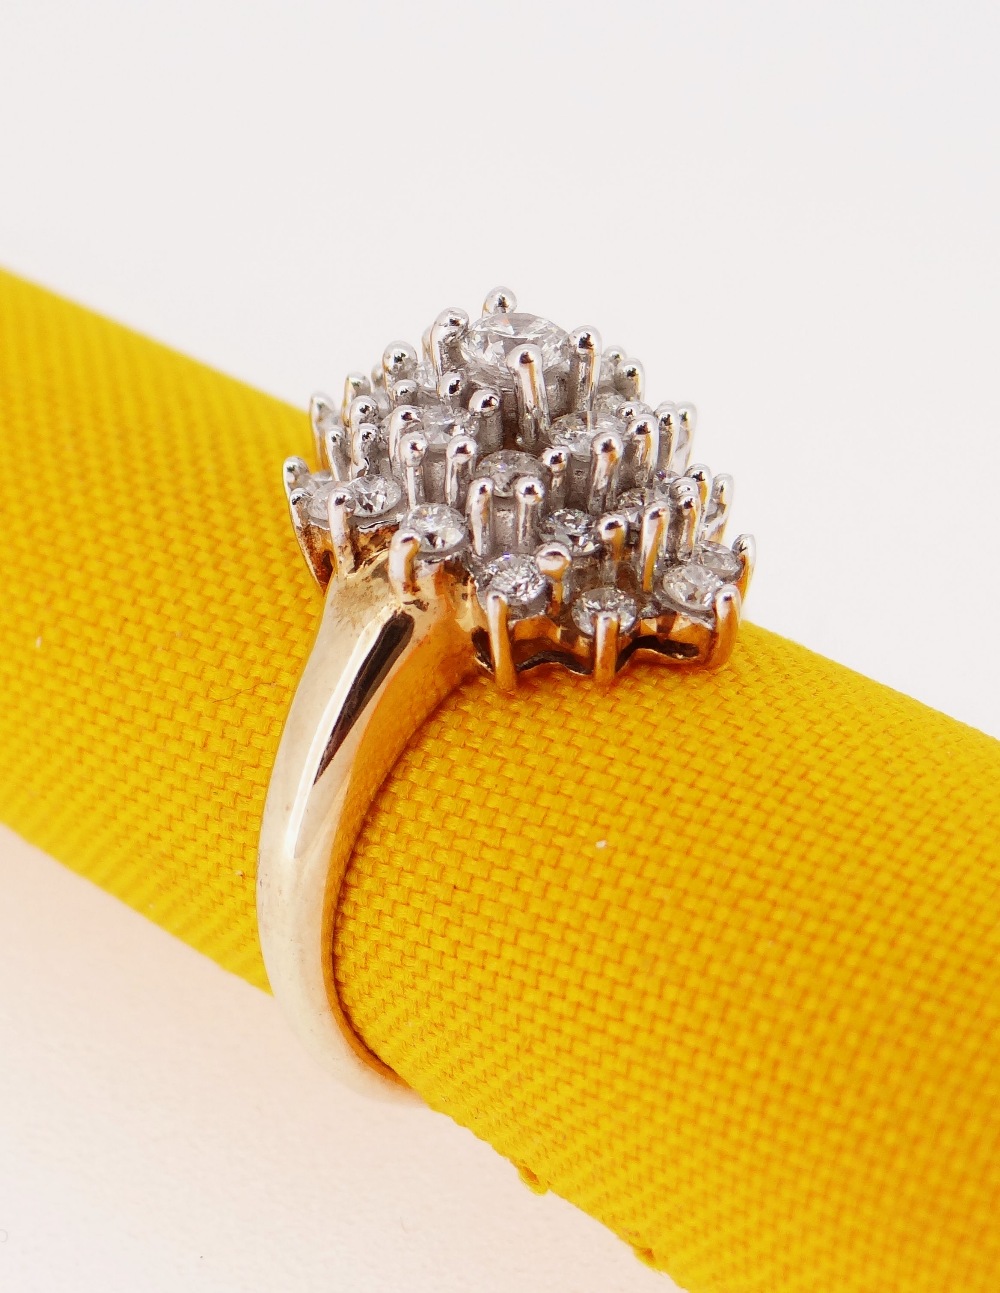 9CT GOLD DIAMOND CLUSTER RING, made up of twenty-nine graduated diamonds, ring size N / O, 4.8gms - Image 2 of 3